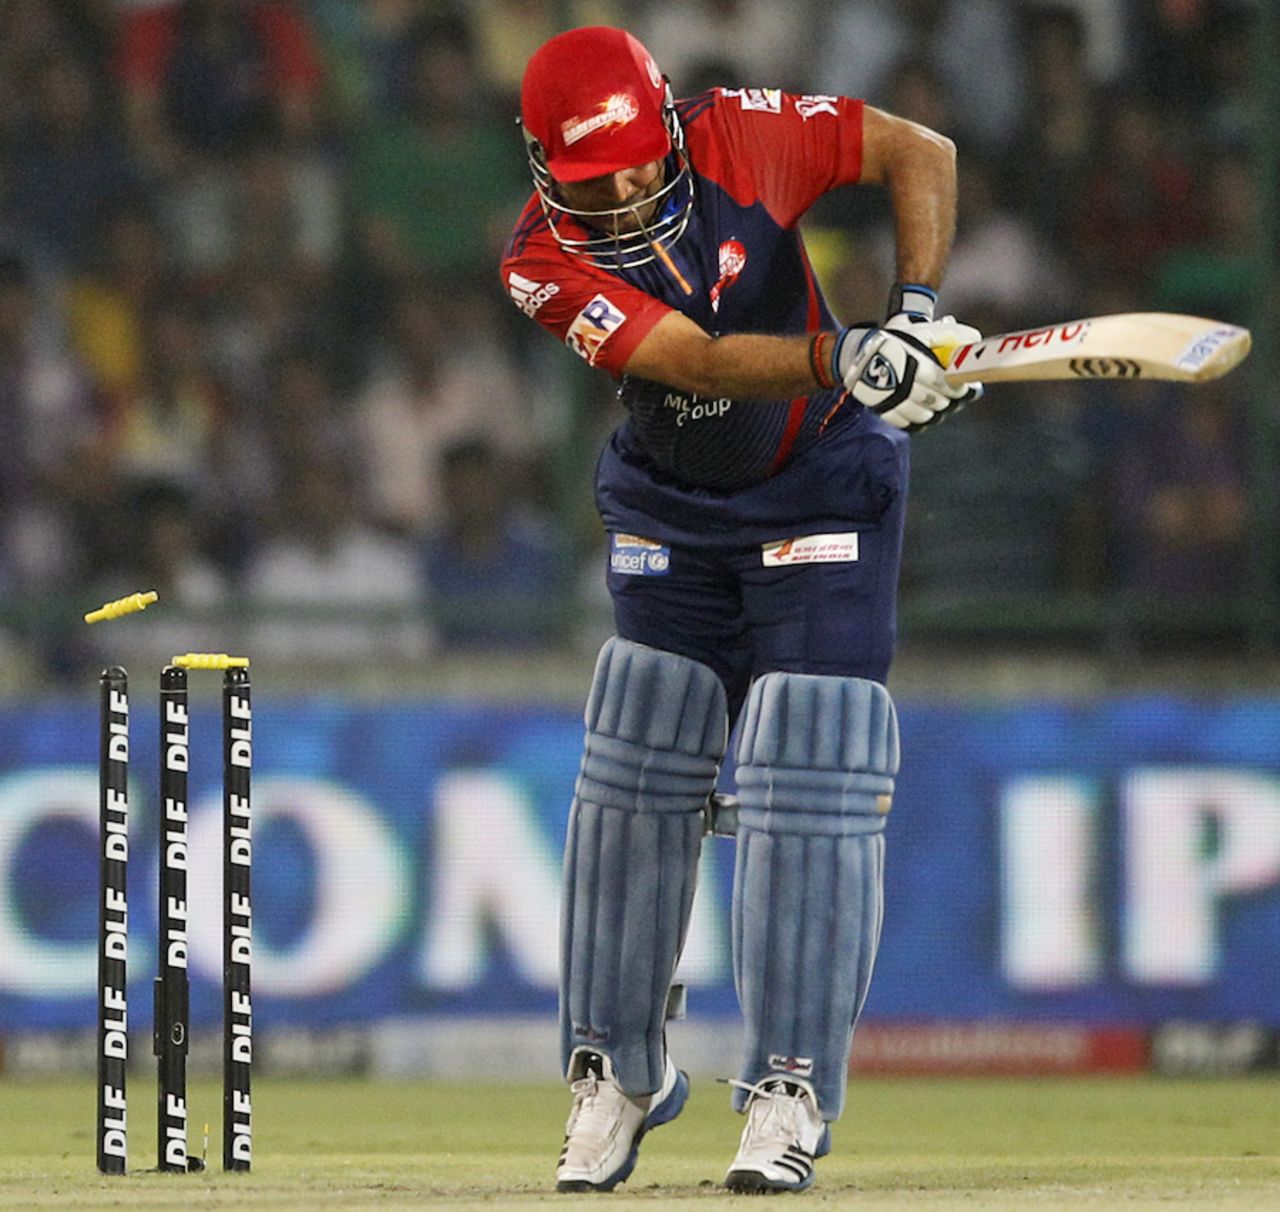 Virender Sehwag was bowled by Parwinder Awana, Delhi Daredevils v Kings XI Punjab, IPL 2012, Delhi, May 15, 2012